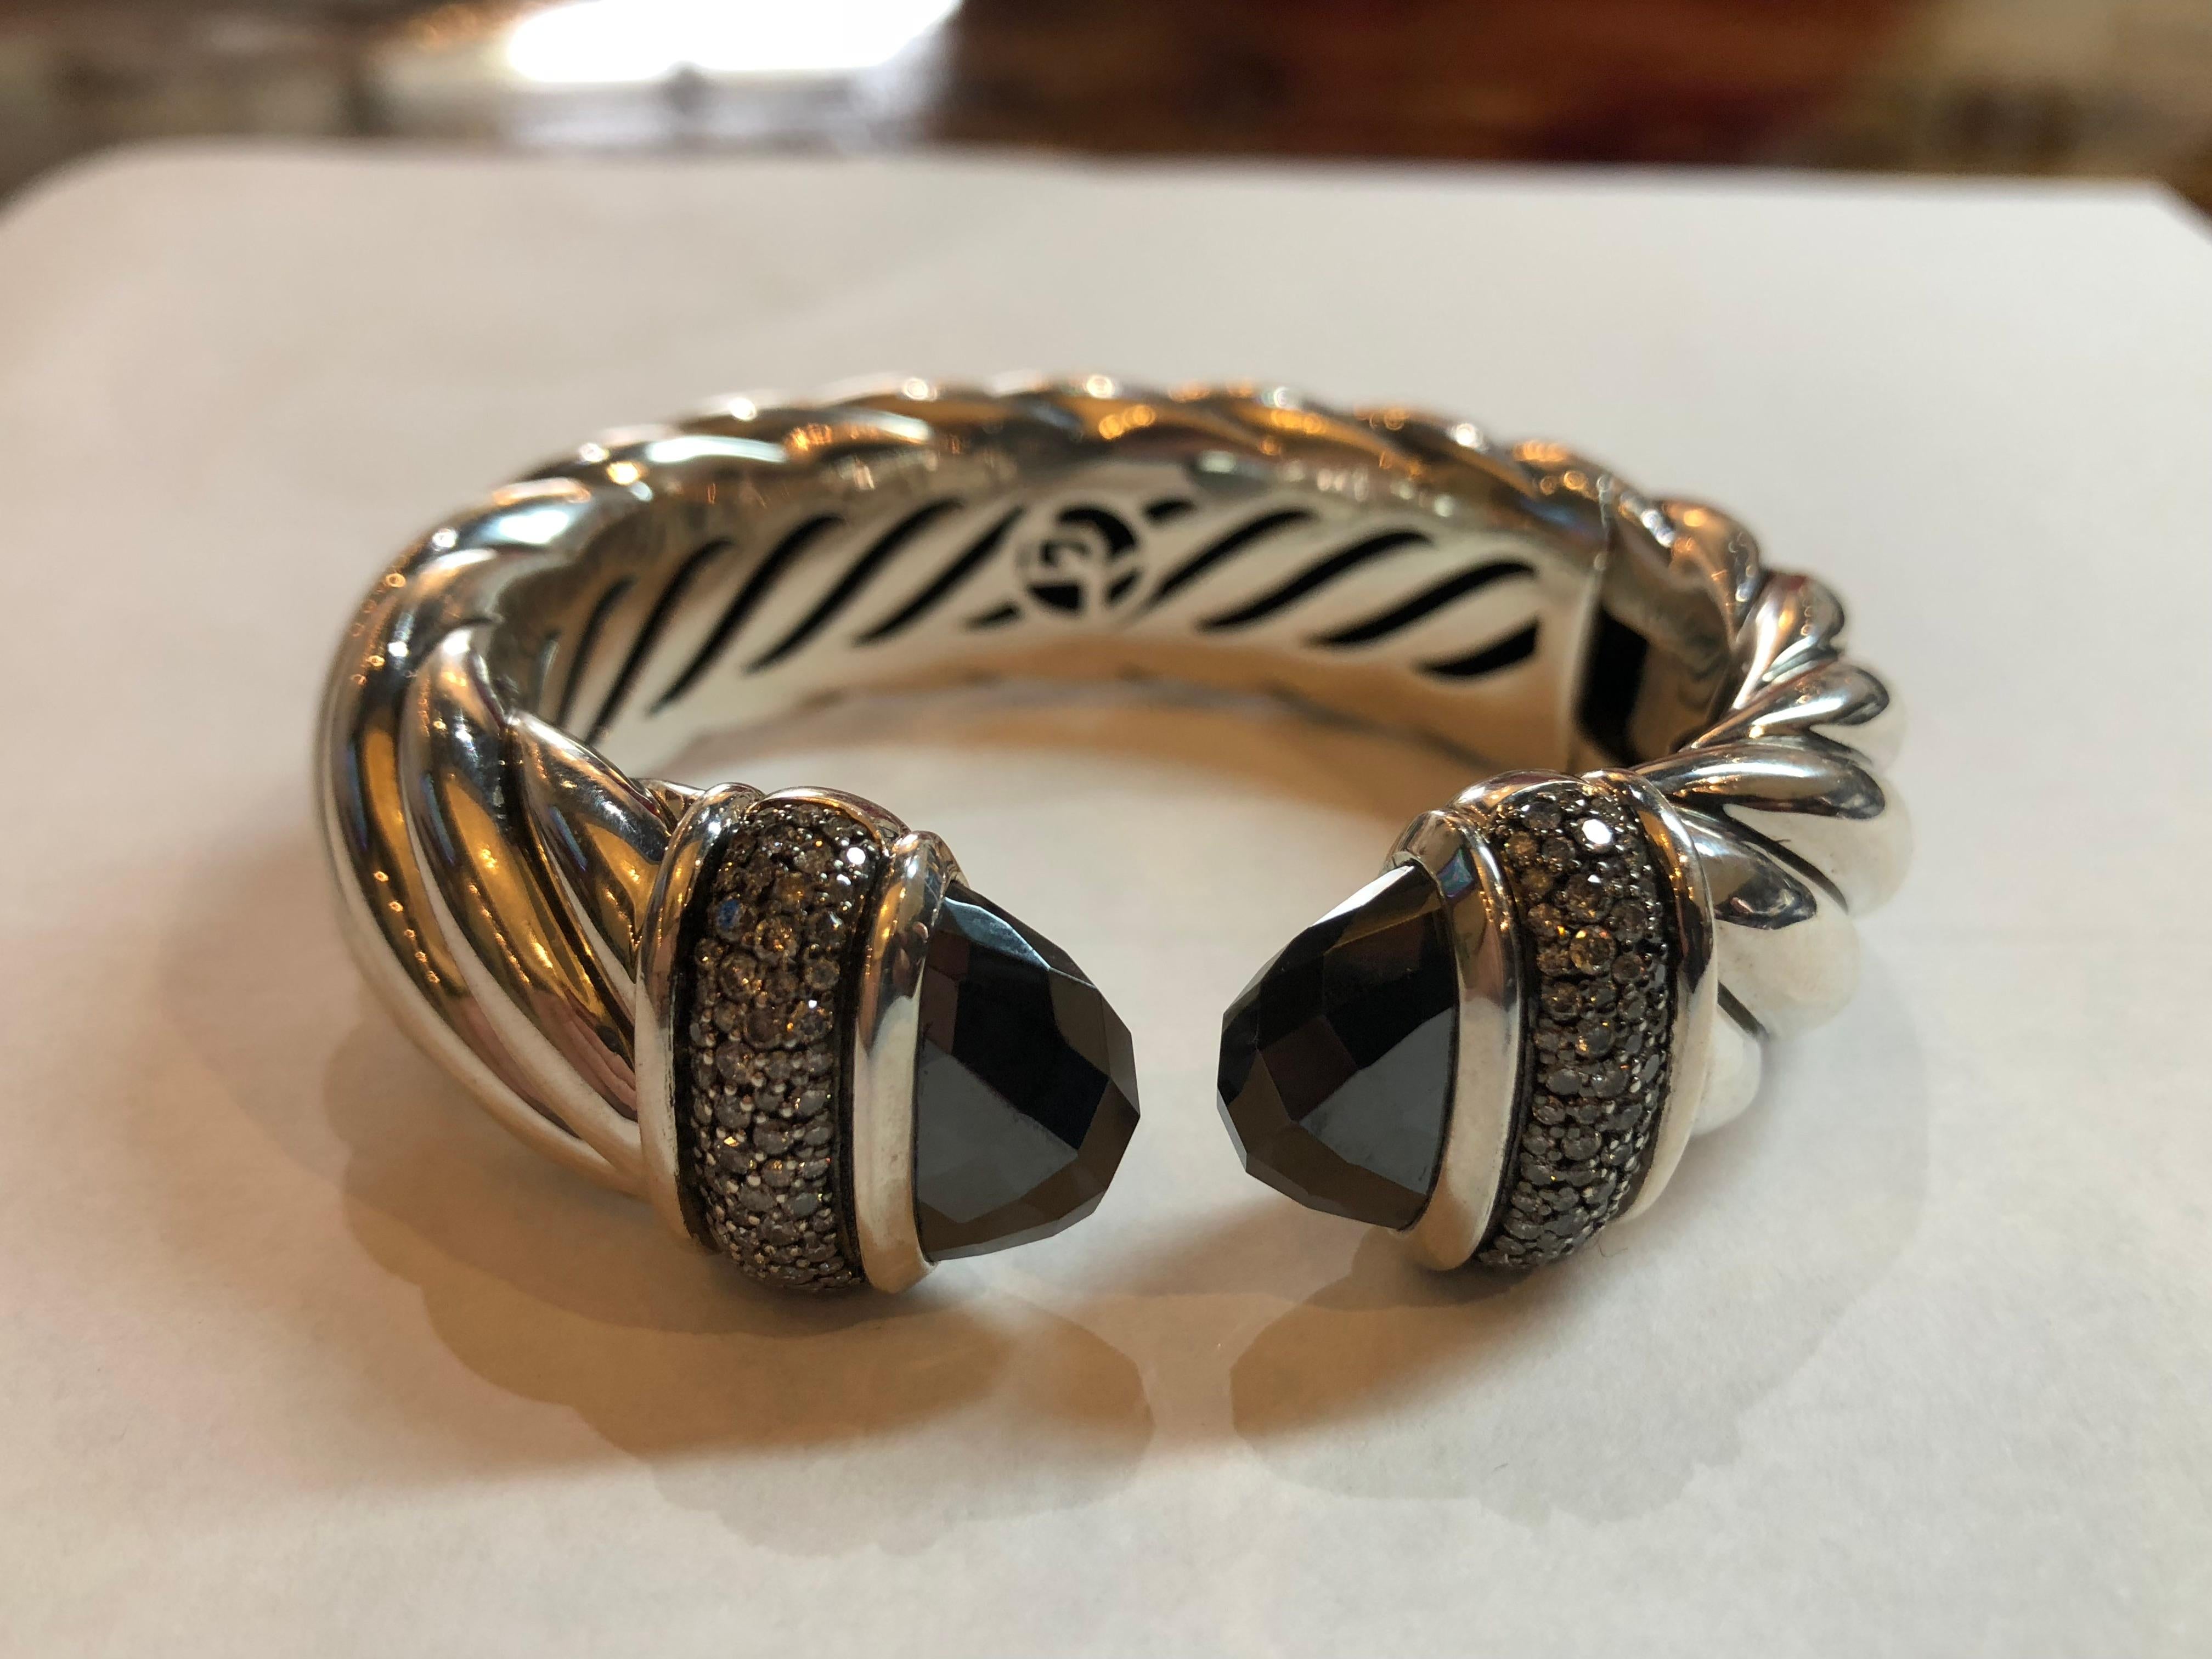 Modern David Yurman Waverly Bracelet Cuff 1.19 Carat Diamond with Hematite